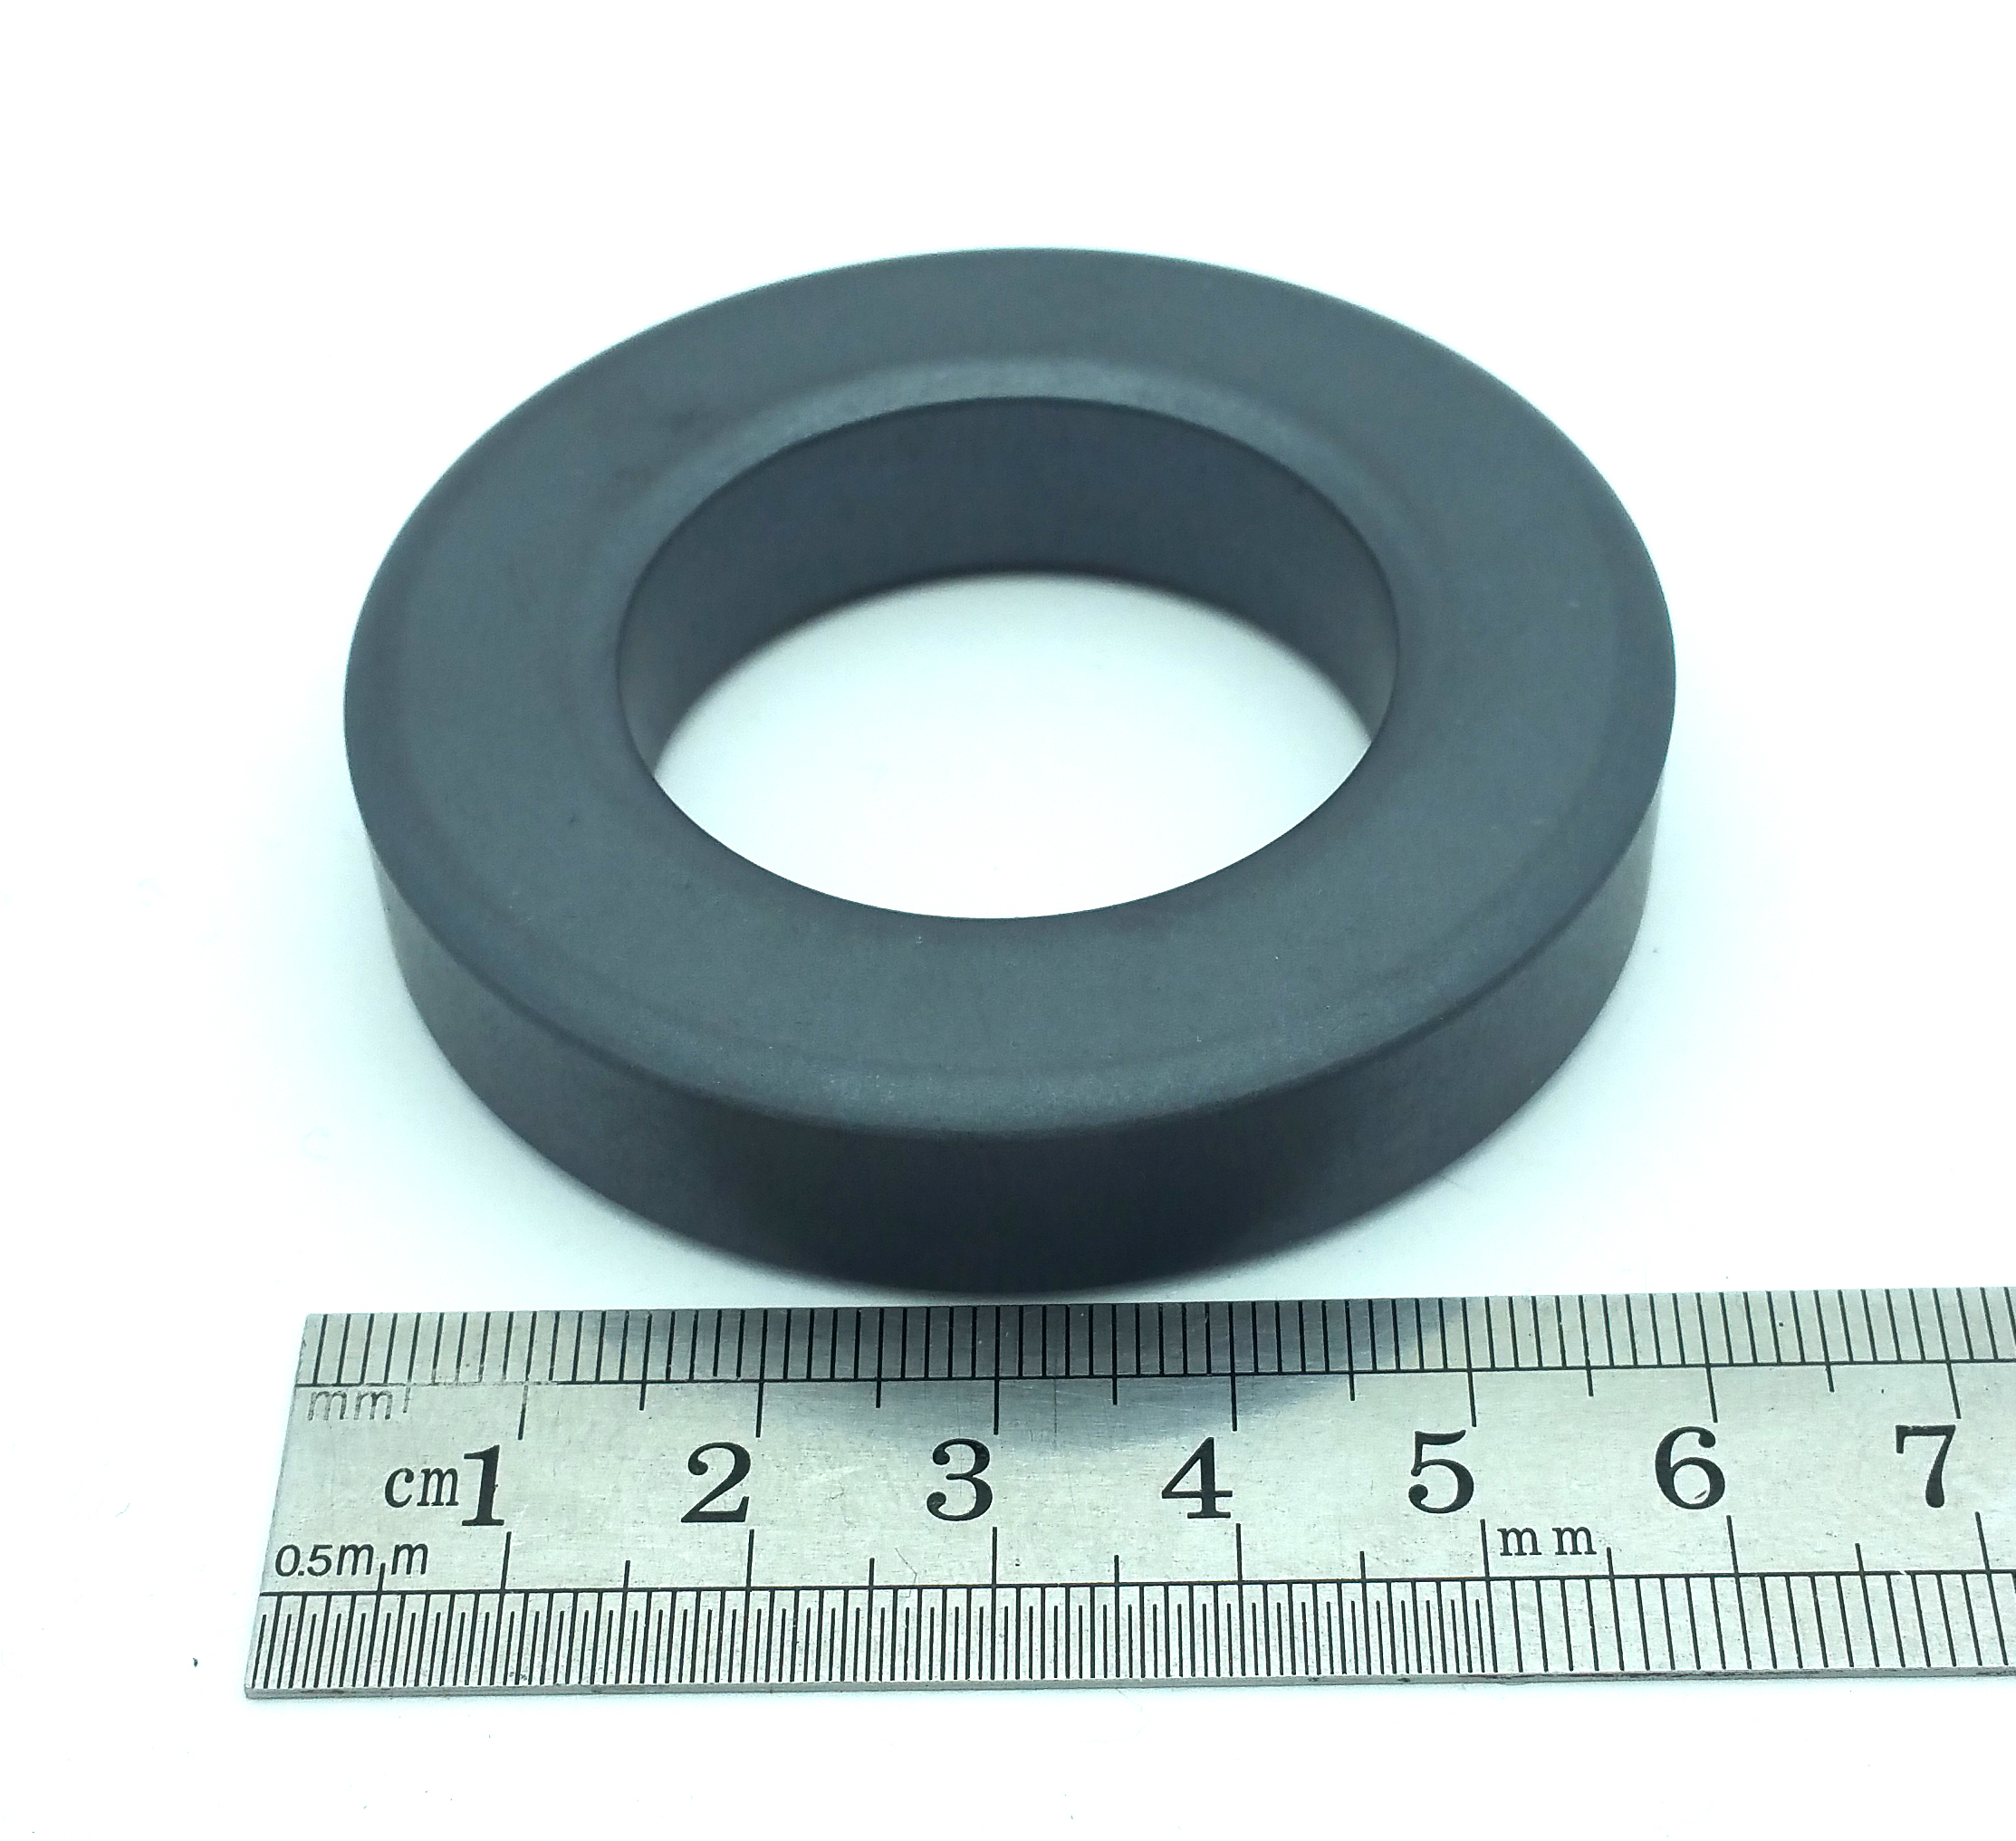 FT-240-43 Ferrite toroid core 2.4-inch diameter #43 Material